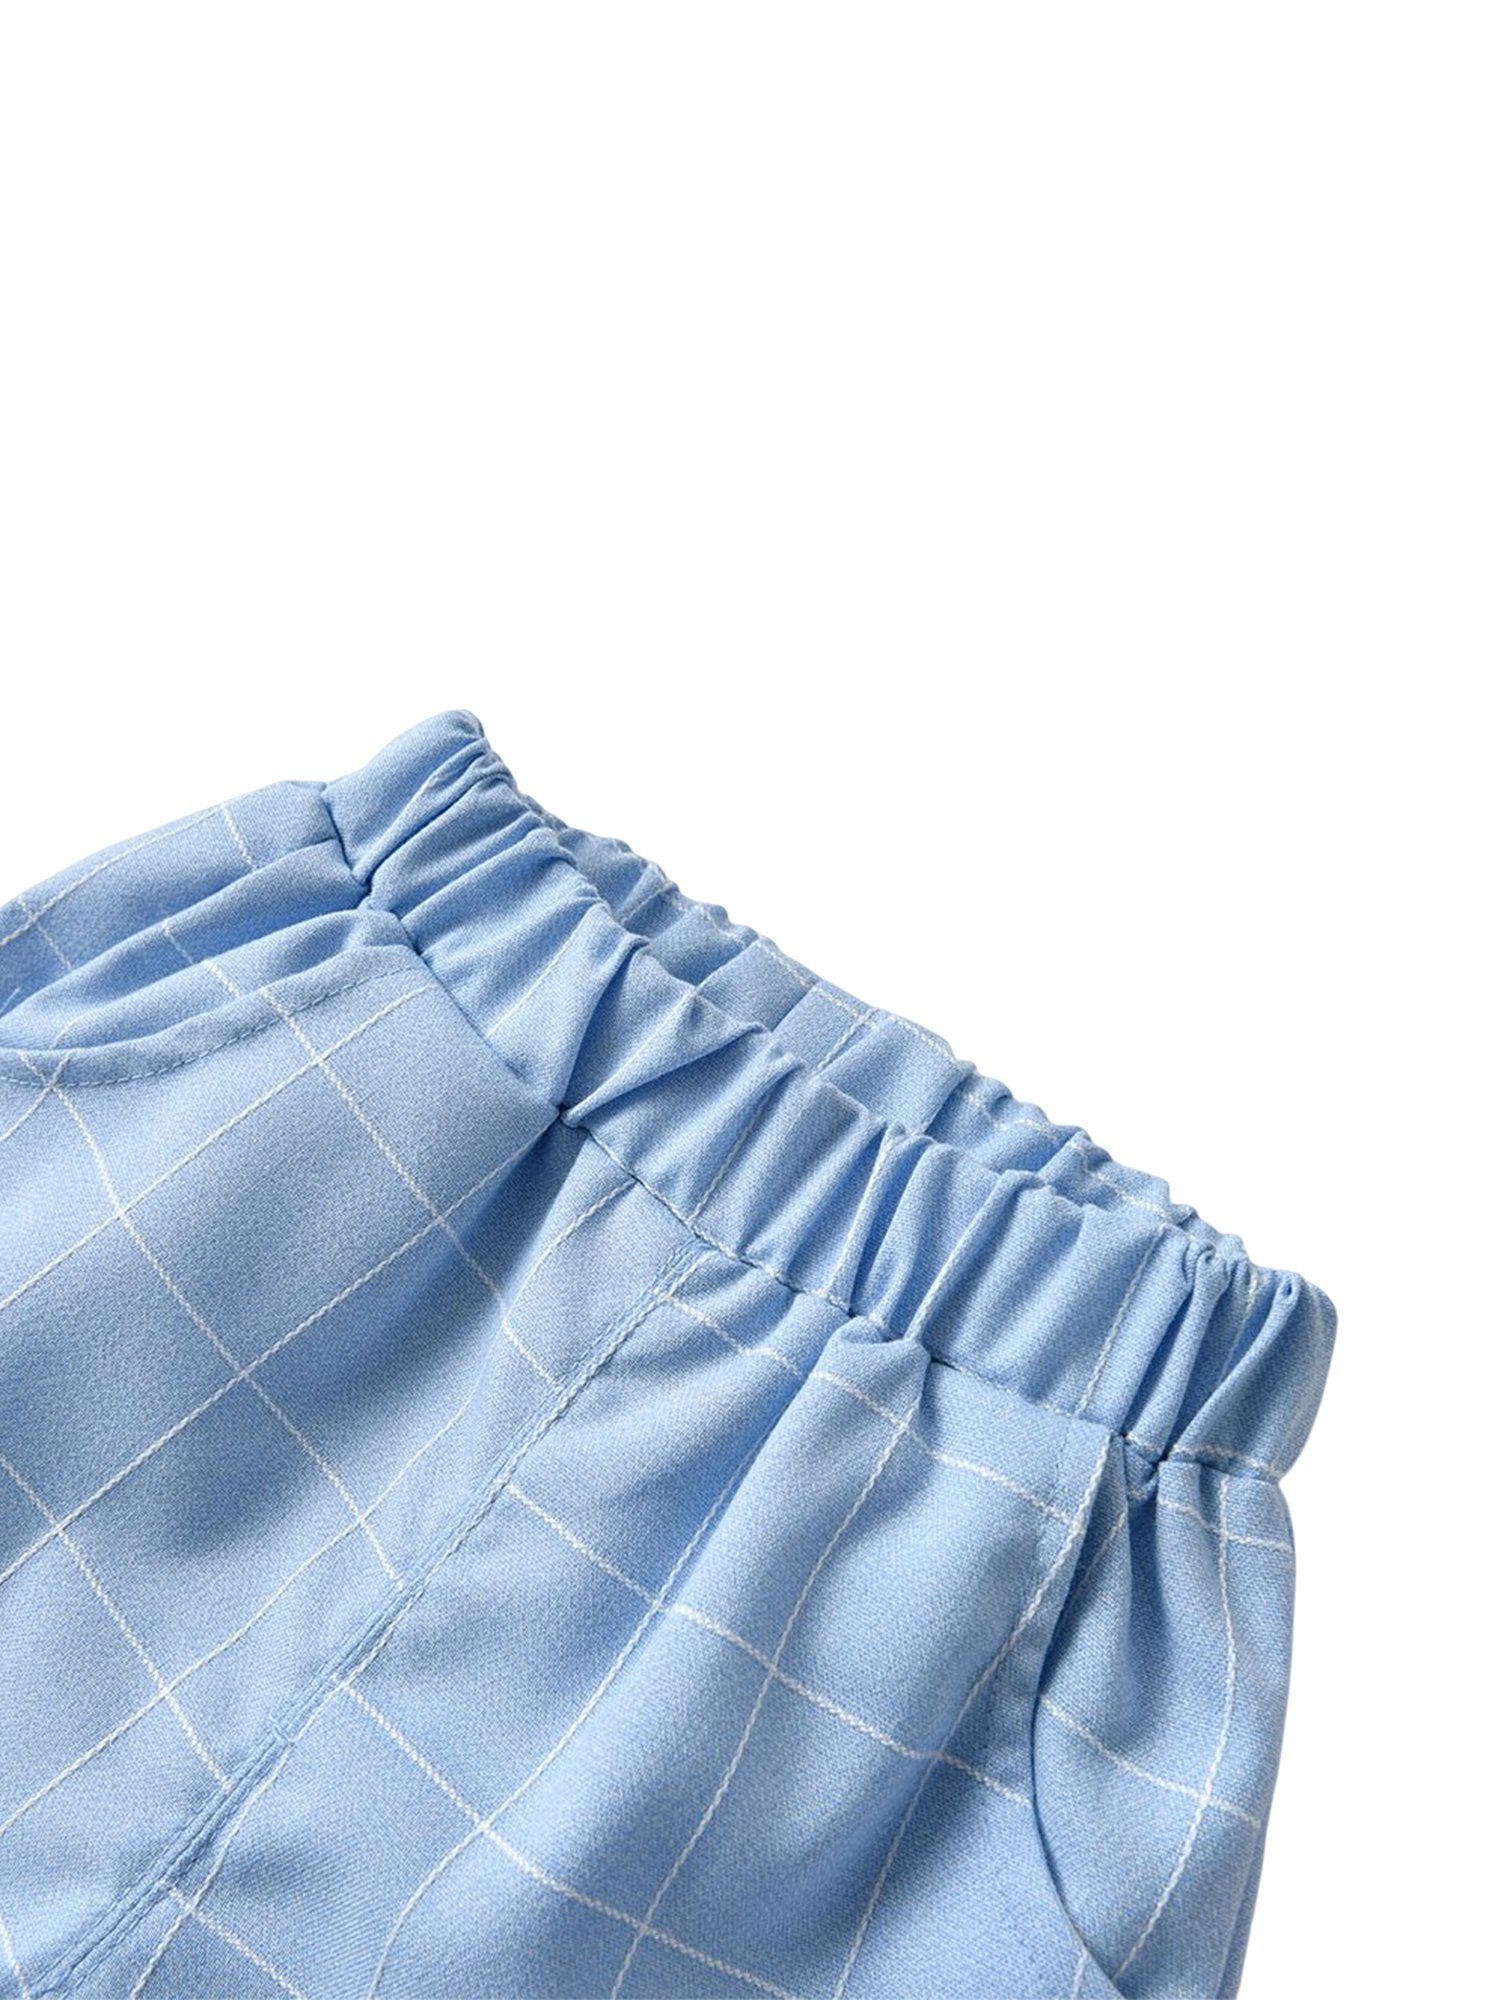 Langarm-Shirt, Jungen Baby Hose, dreiteiliges Blau Lapastyle Weste, Set Anzug